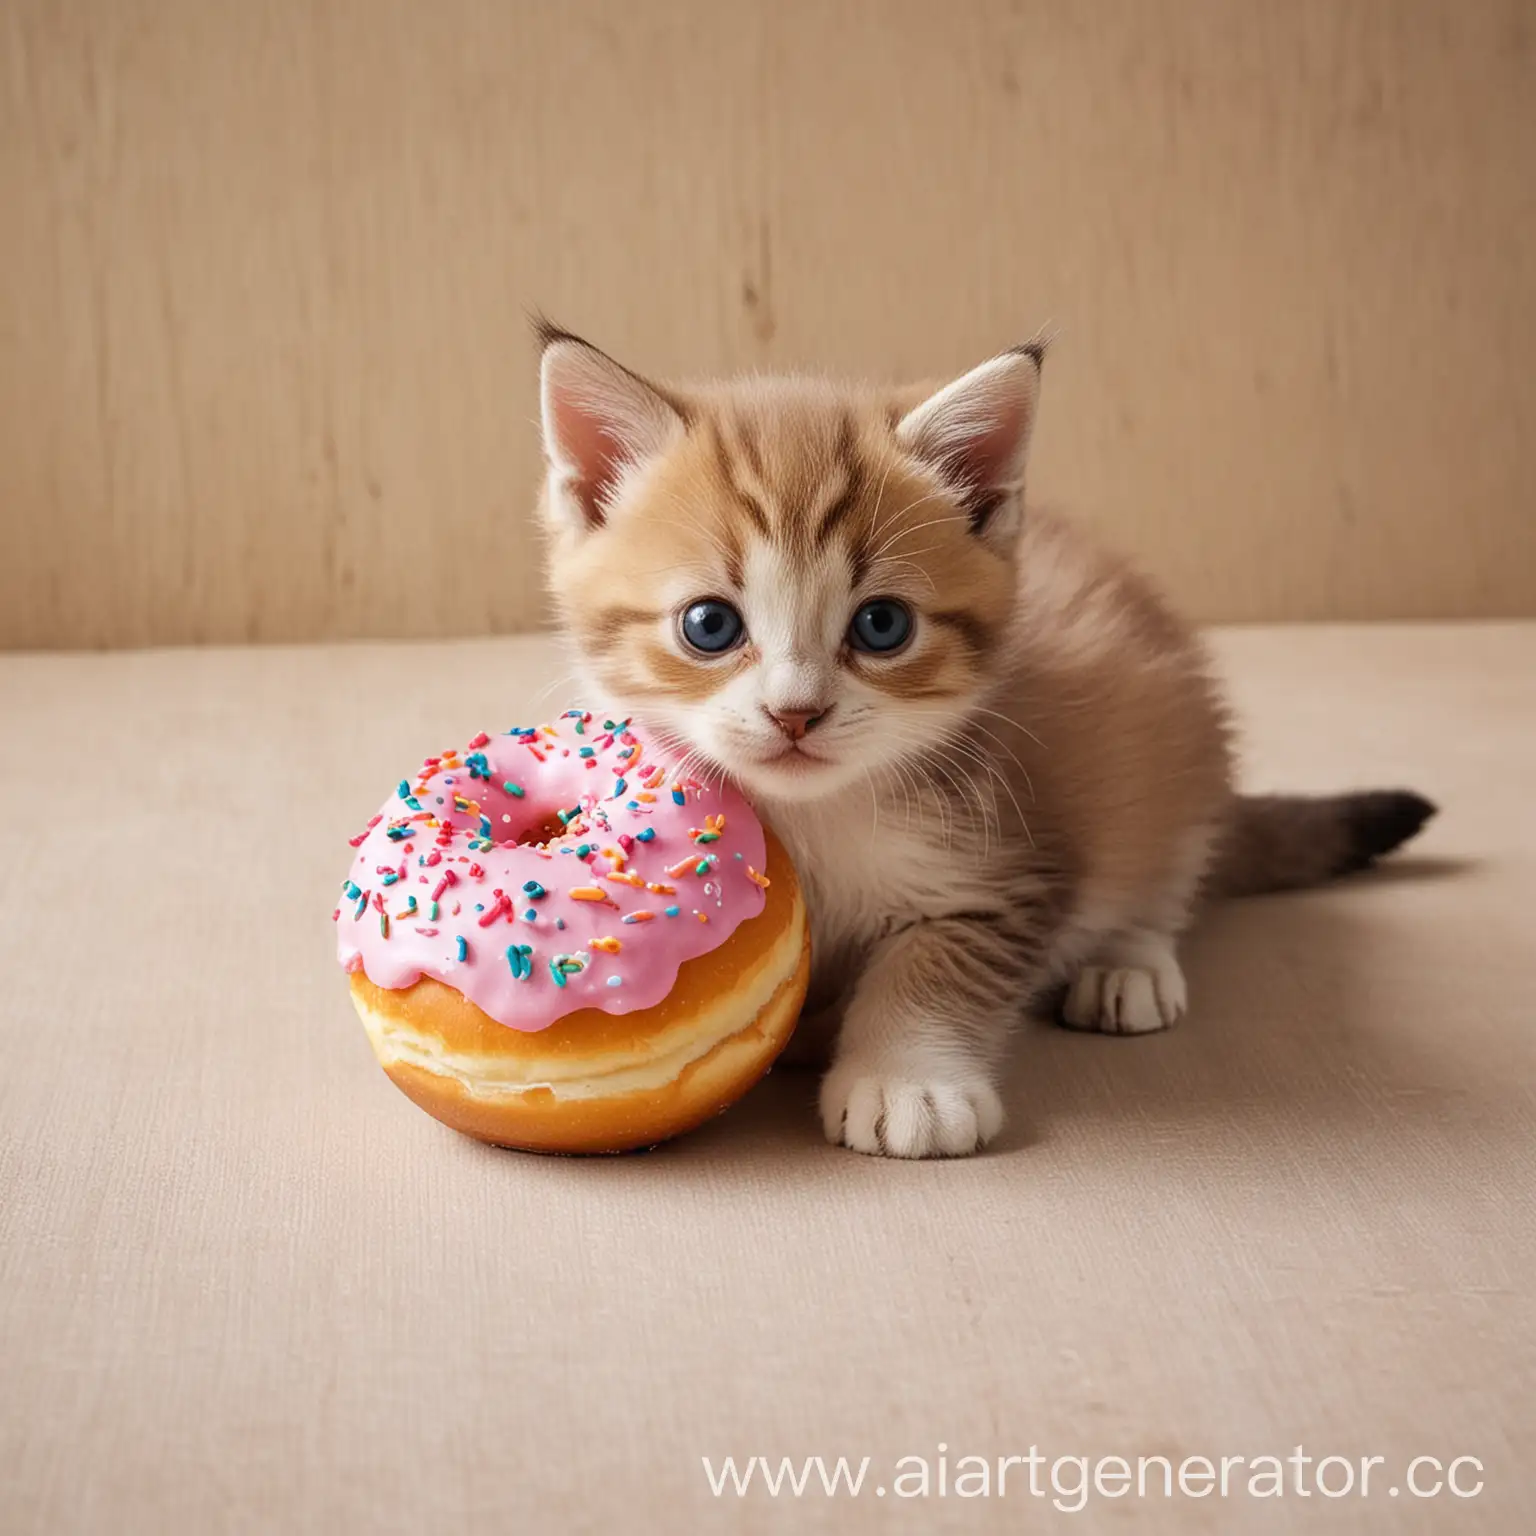 Adorable-Kitten-Enjoying-a-Large-Doughnut-Treat